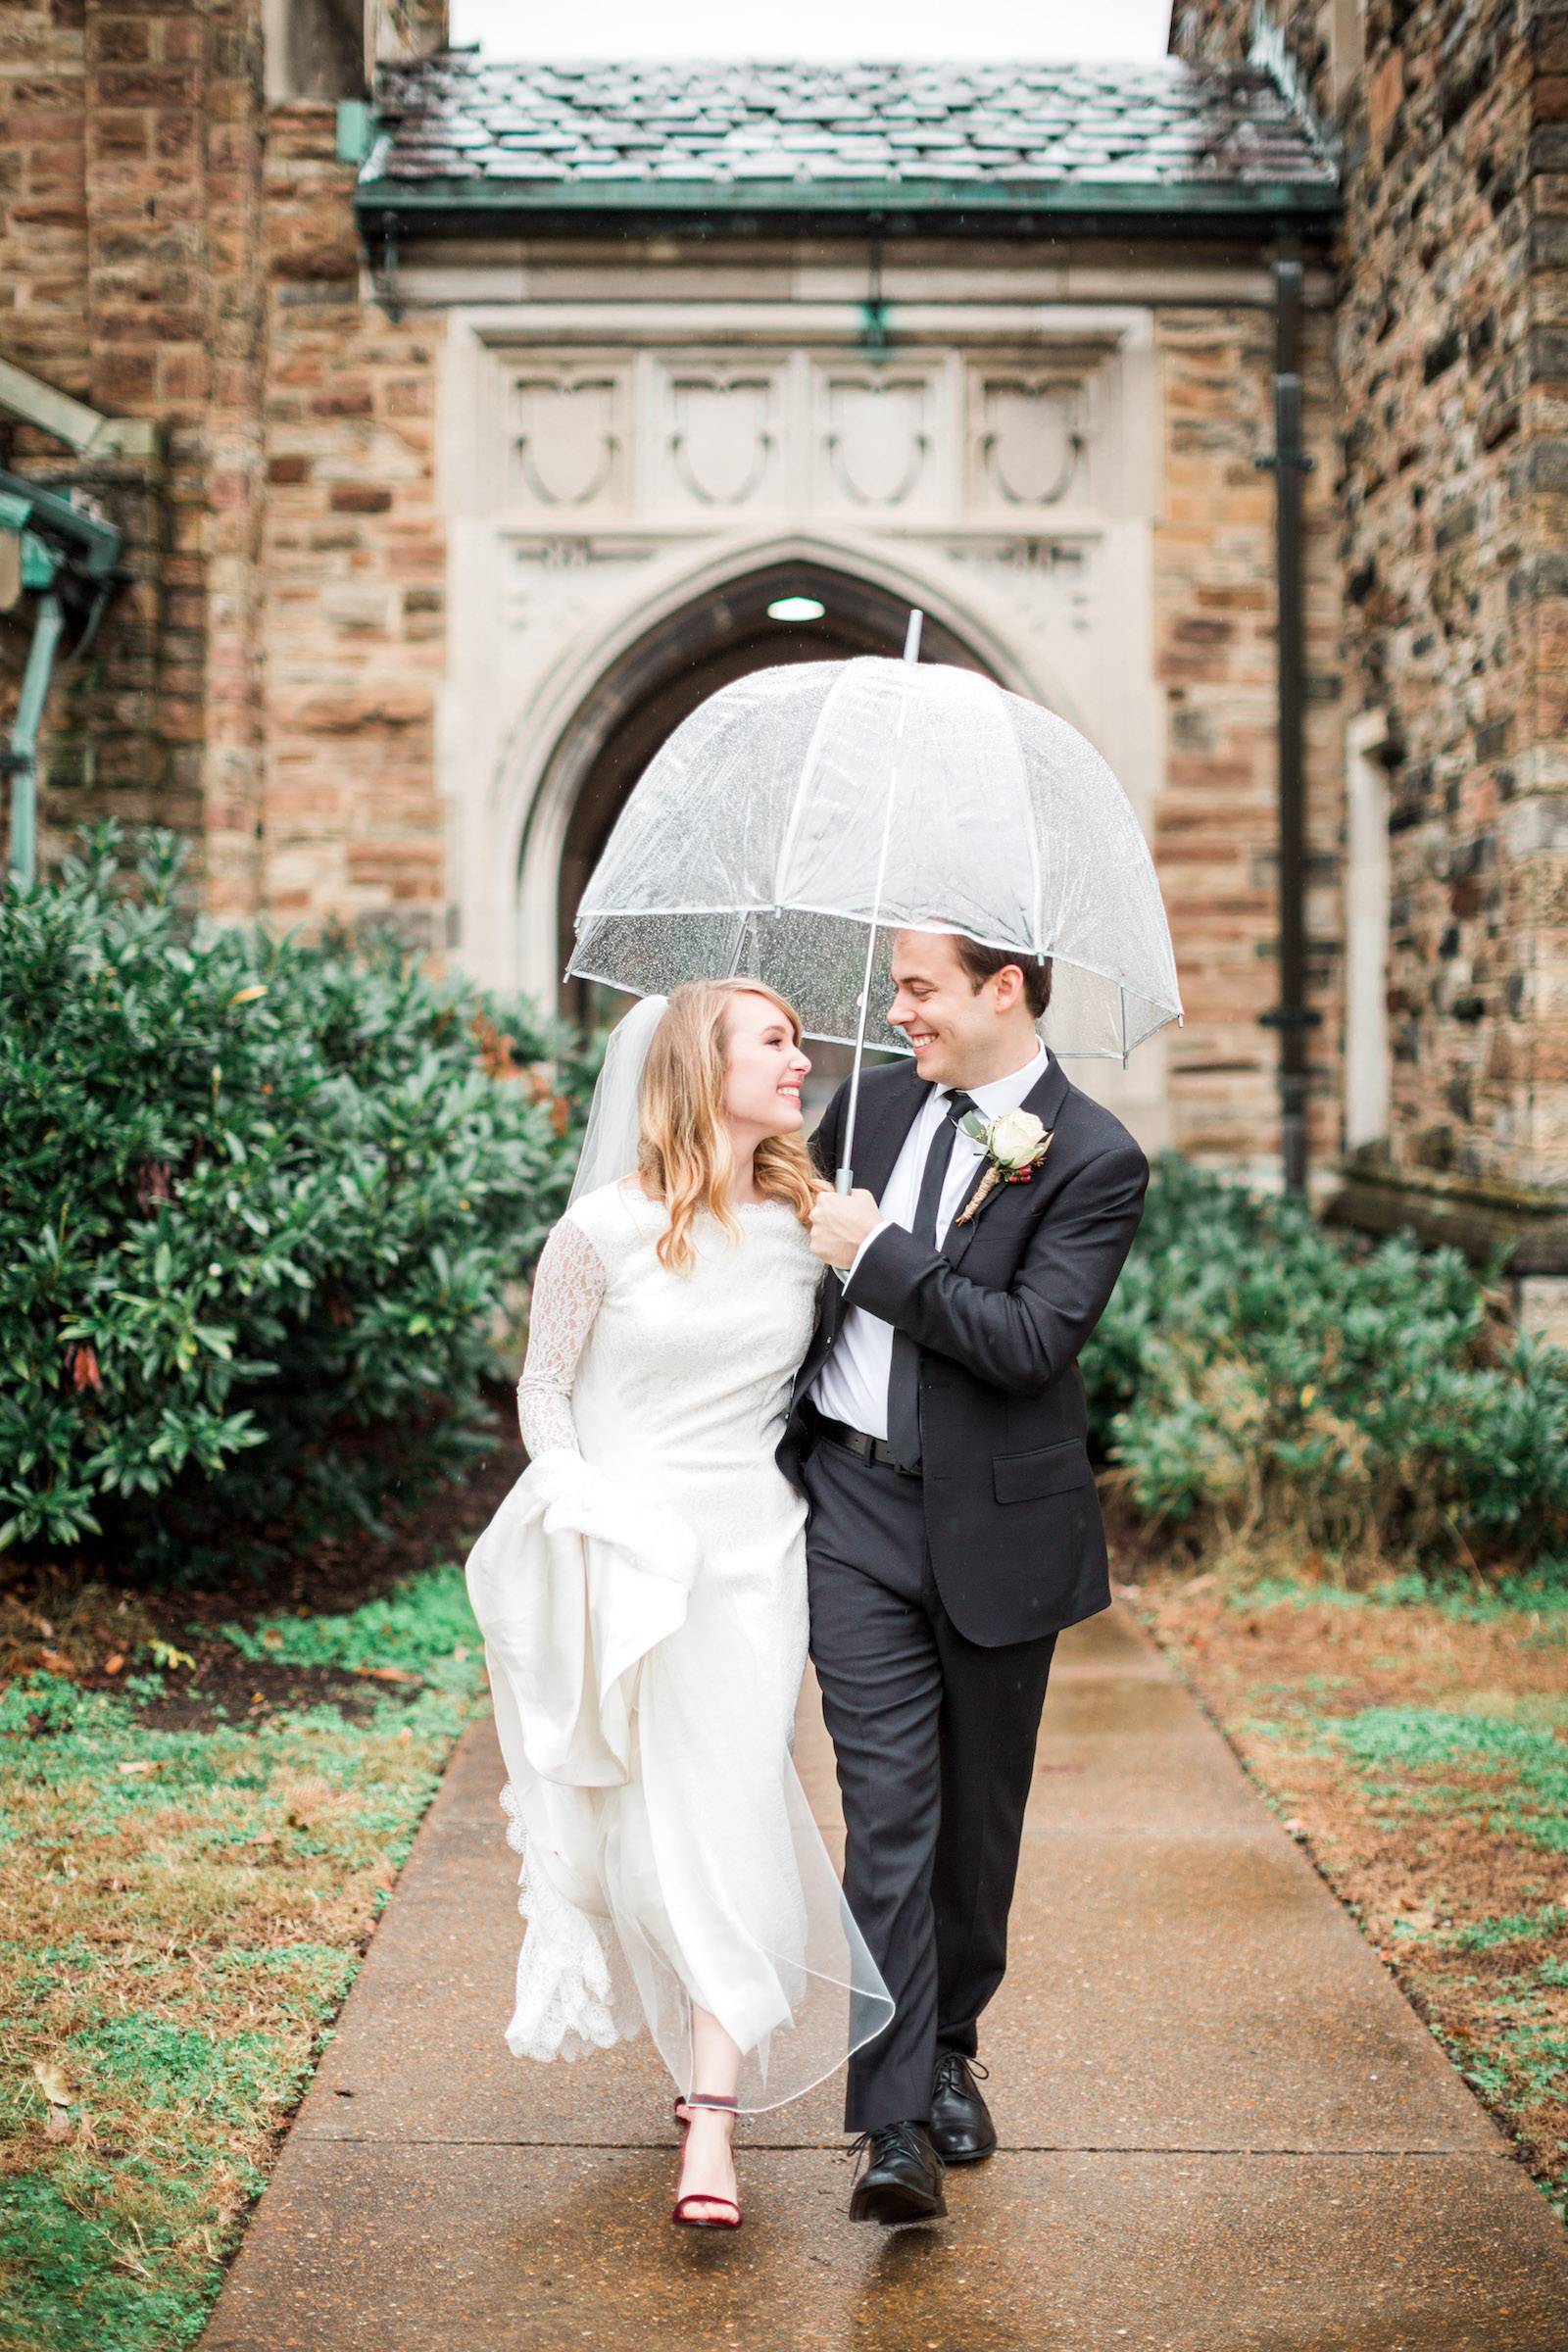 Olivia + Reese’s Rainy Day Wedding by Lindsay Campbell |  Nashville